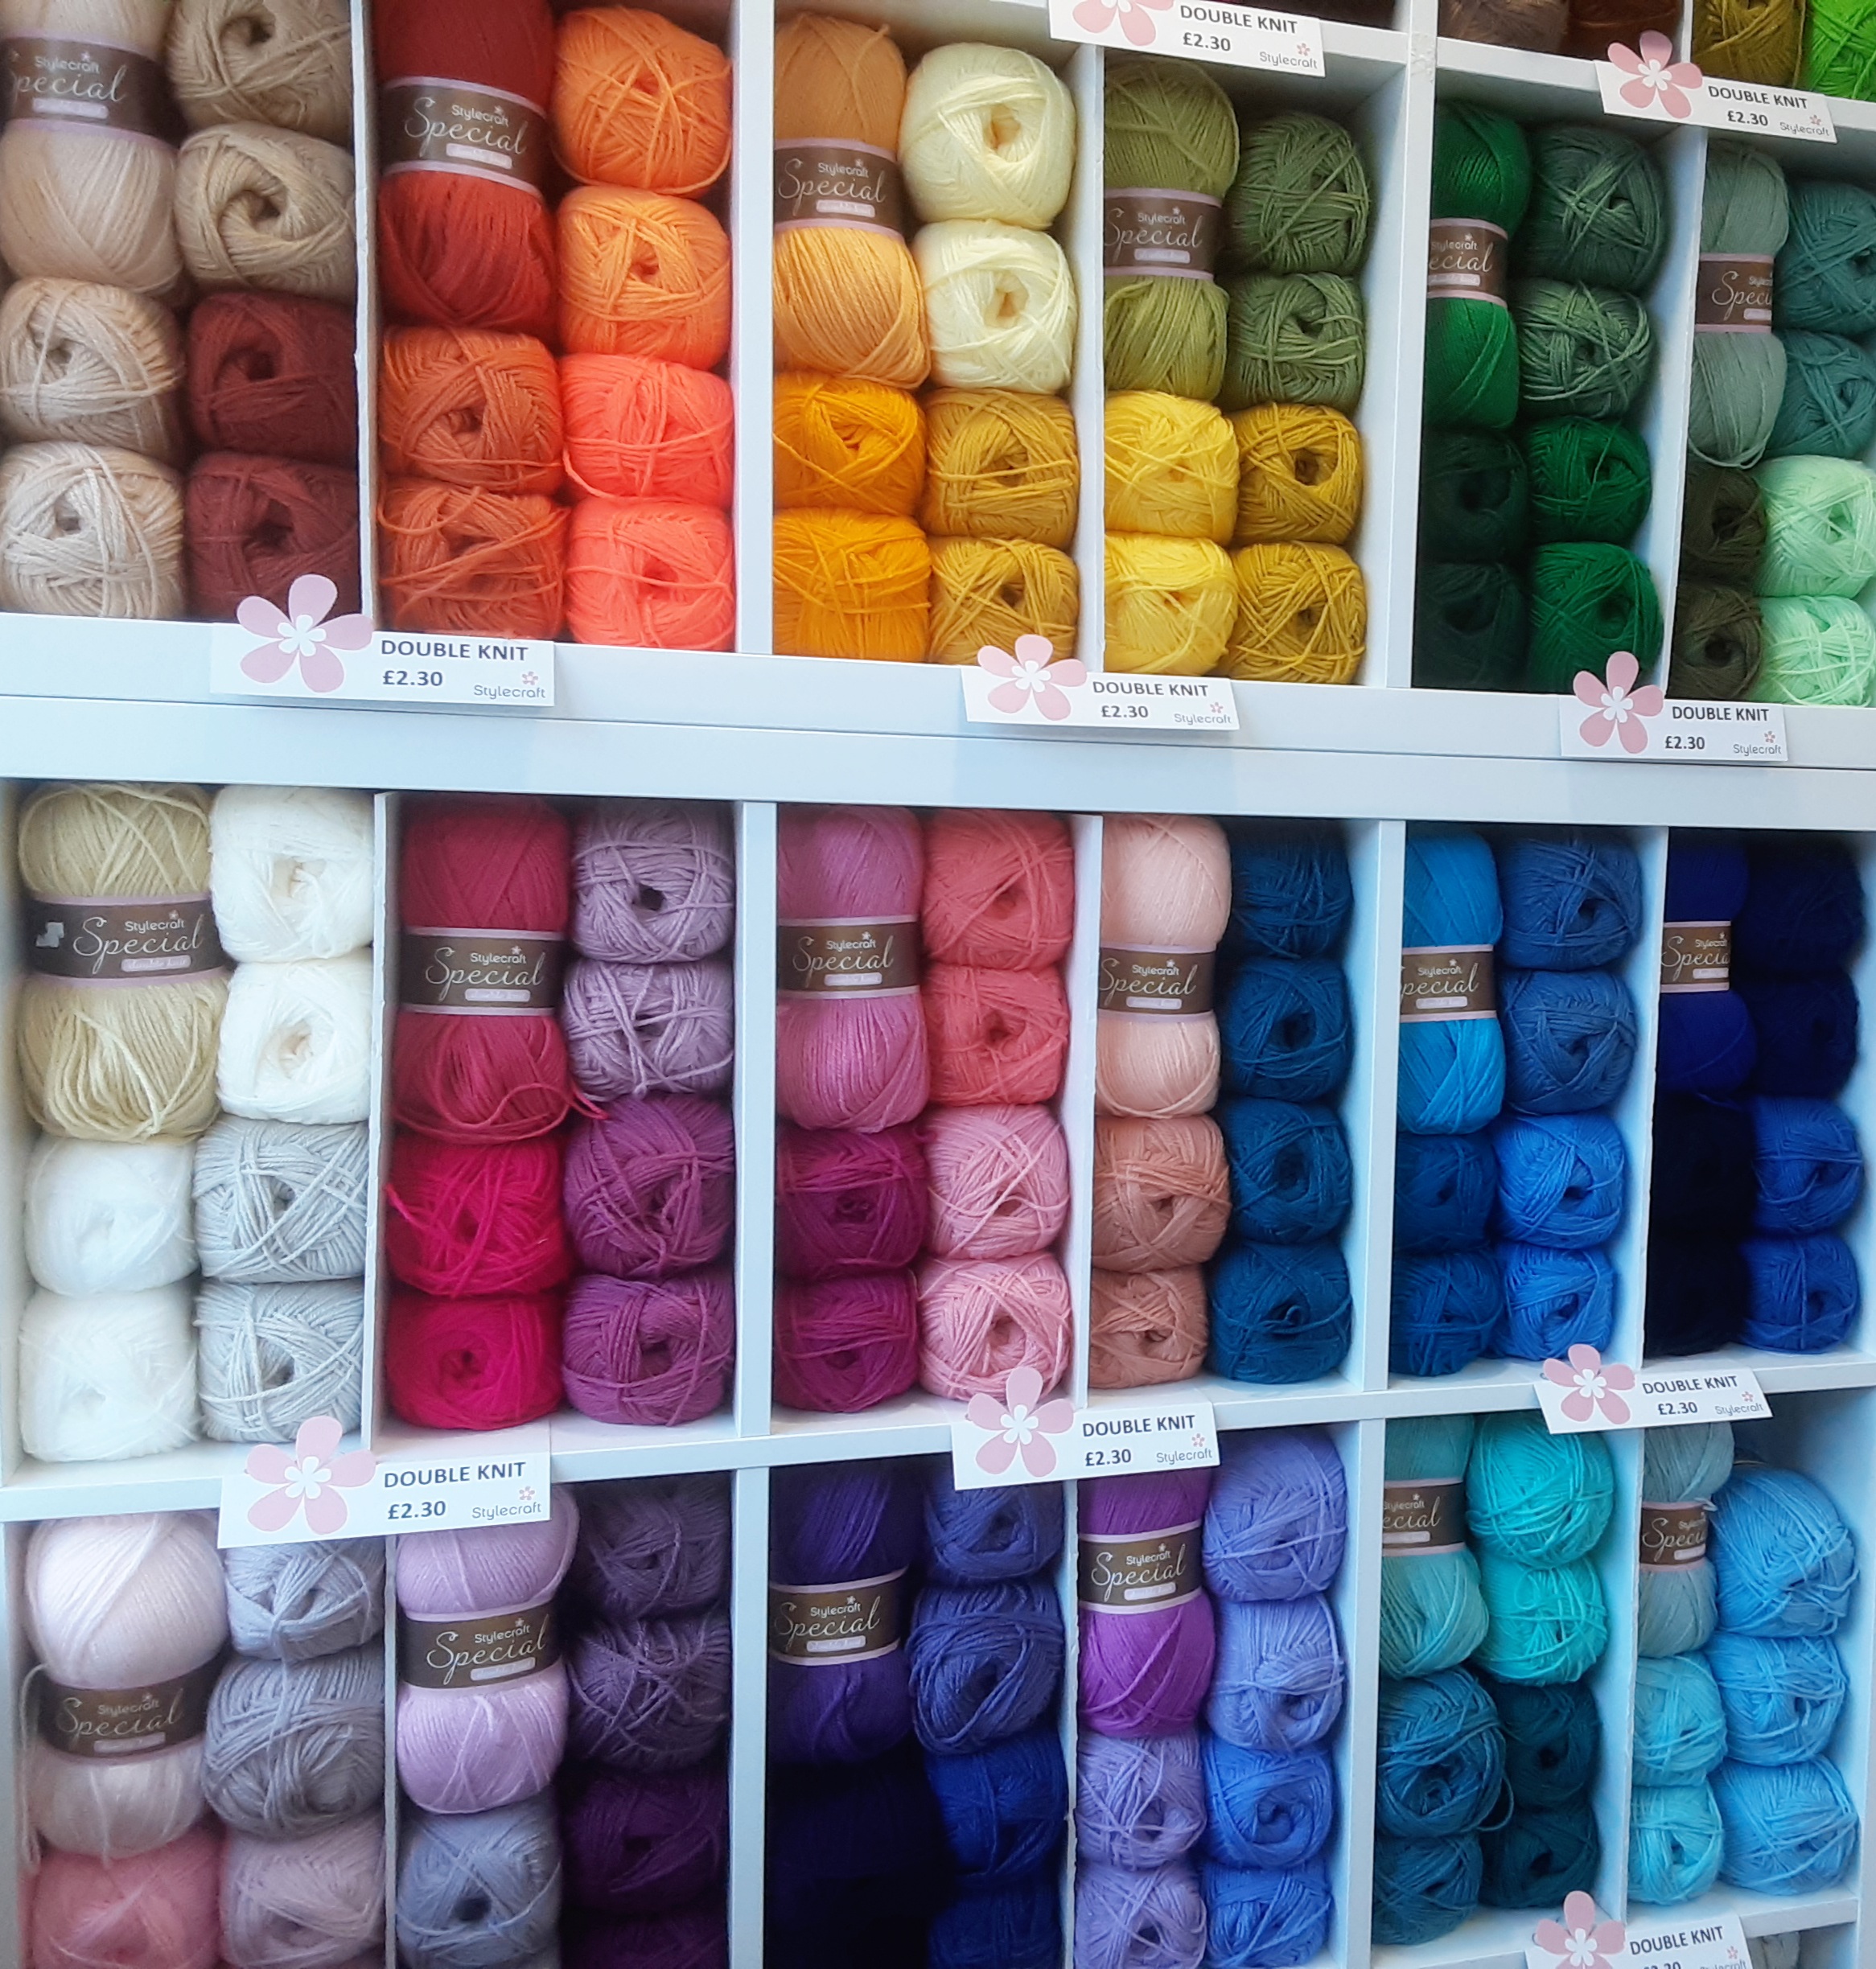 Knitting & crochet yarn